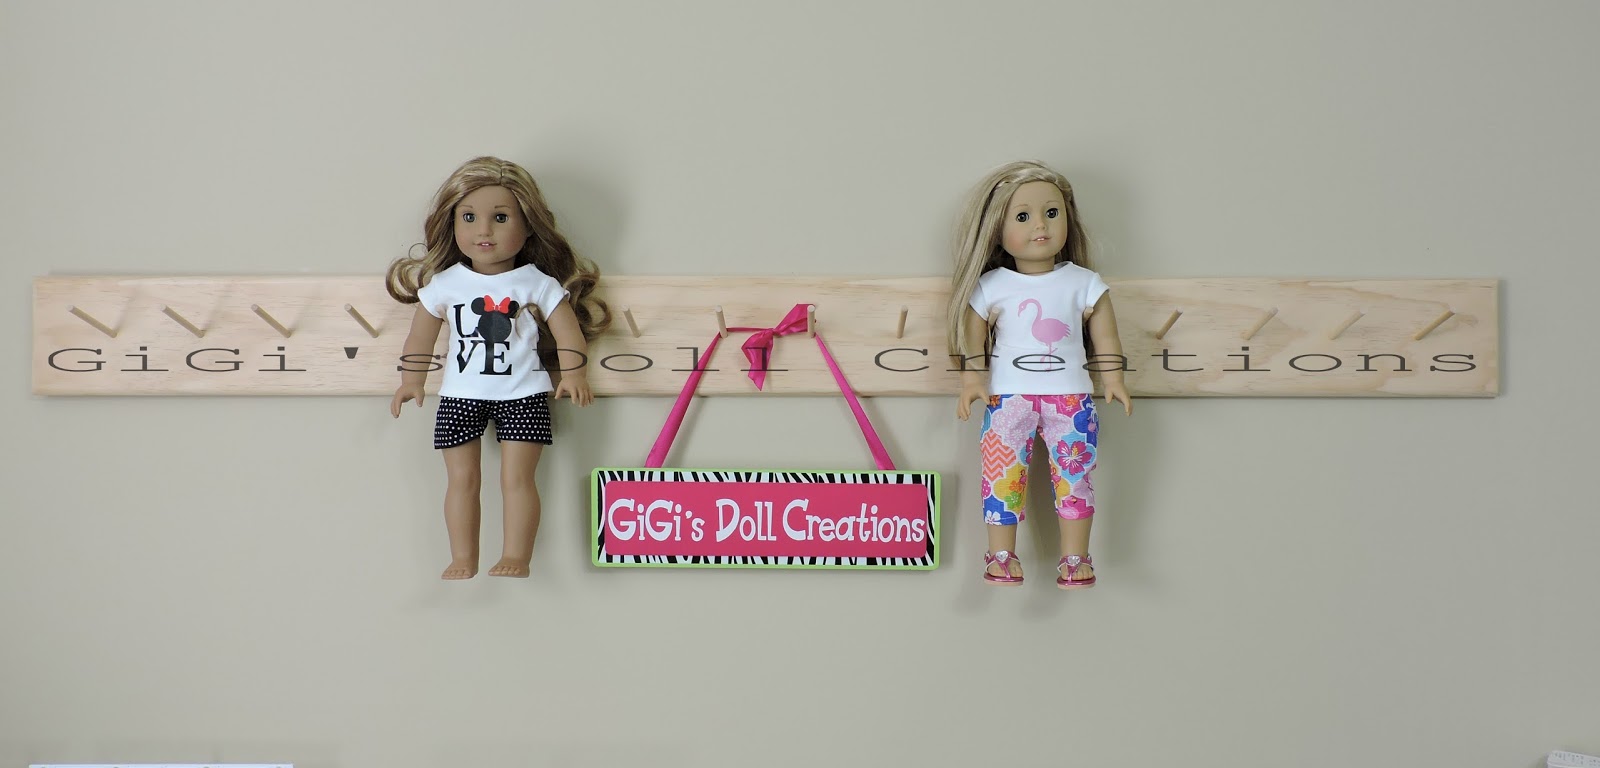 american girl doll hangers